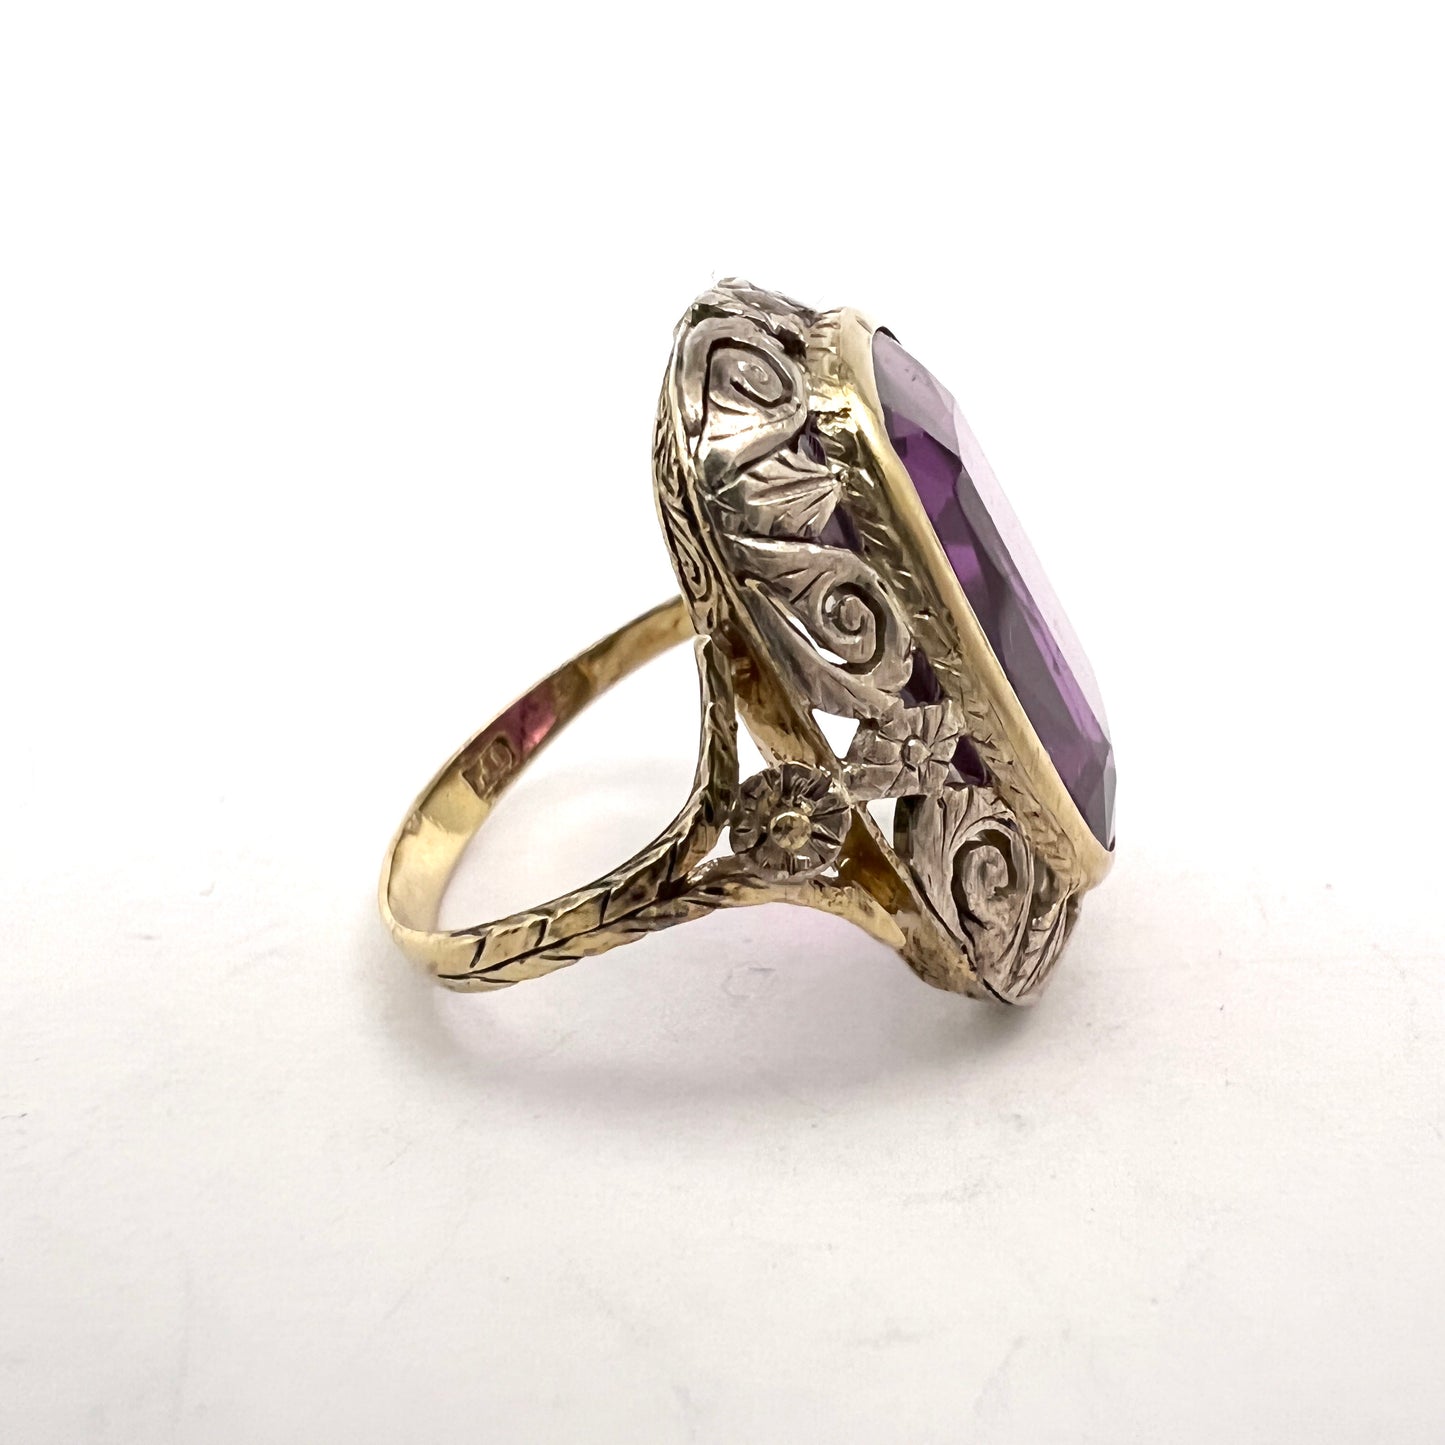 Maker FD 1930-40s. Vintage 18k Gold Silver Amethyst Ring.